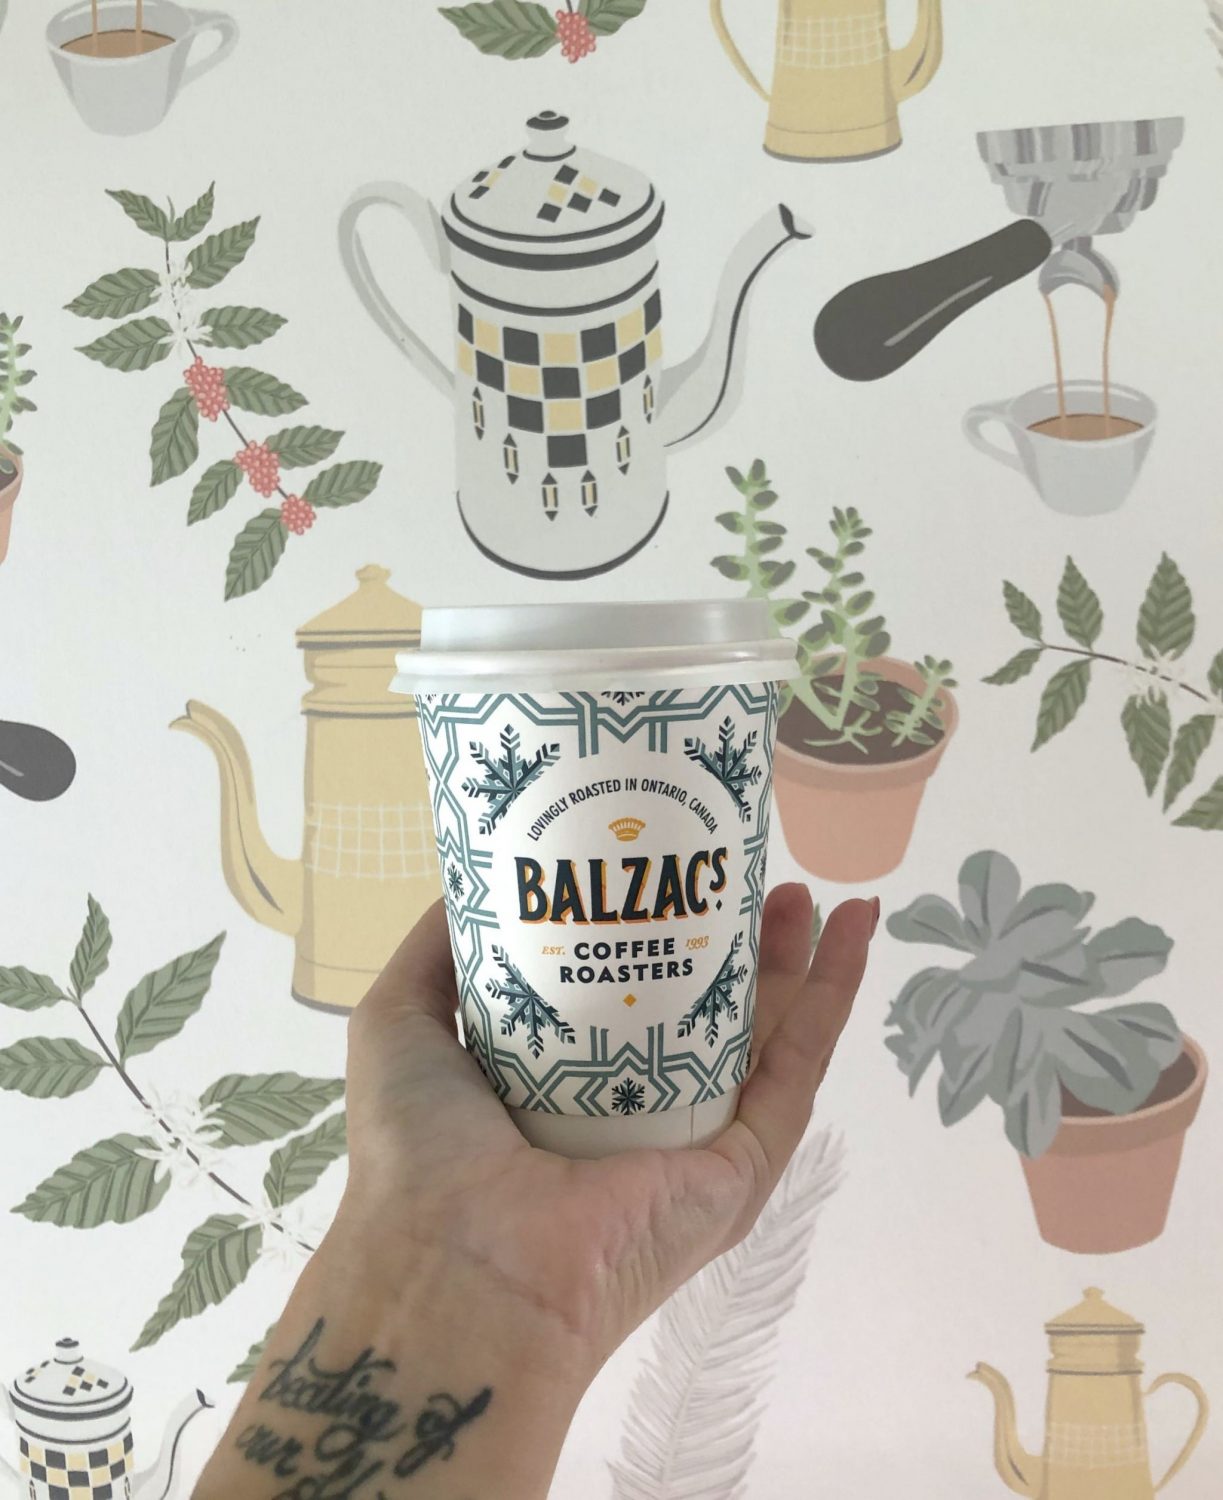 Balzac’s Coffee Roasters